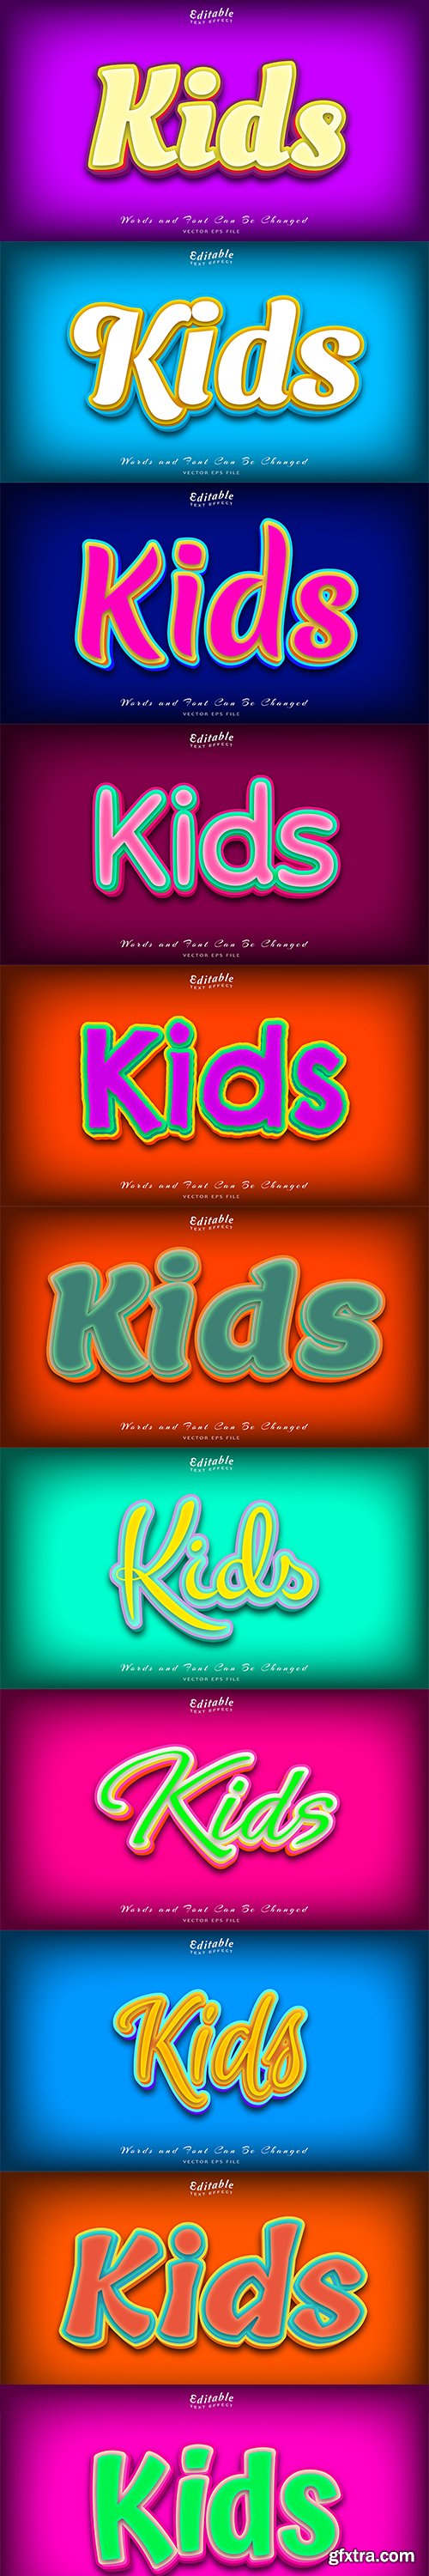 Kids editable text effect